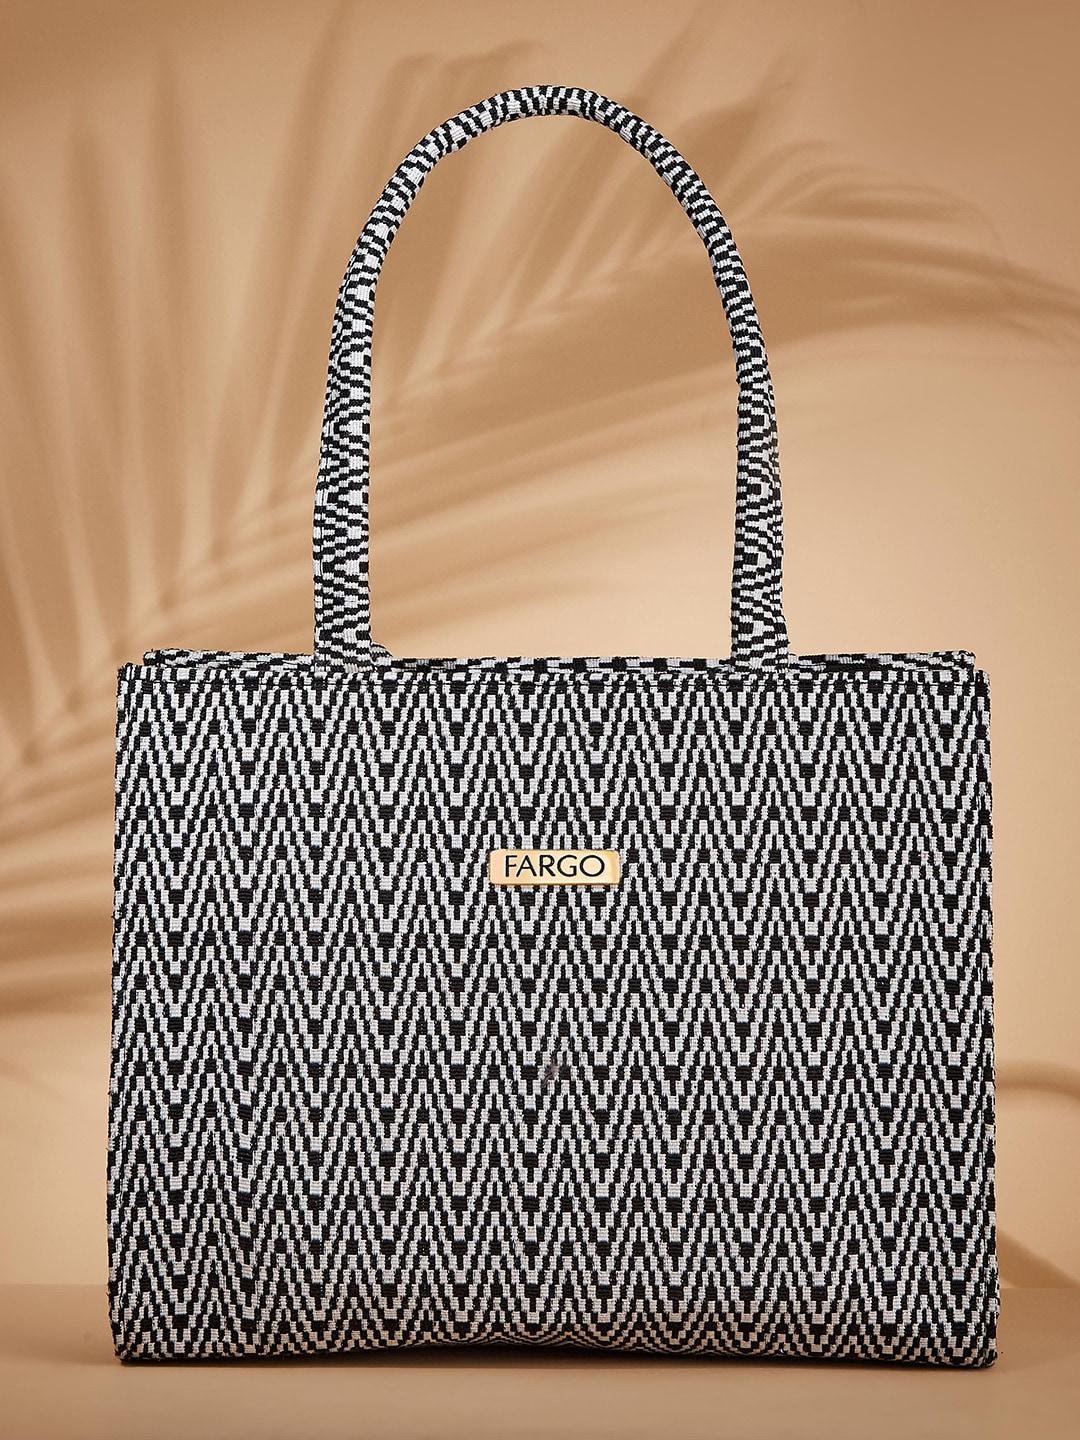 fargo-geometric-textured-oversized-structured-shoulder-bag